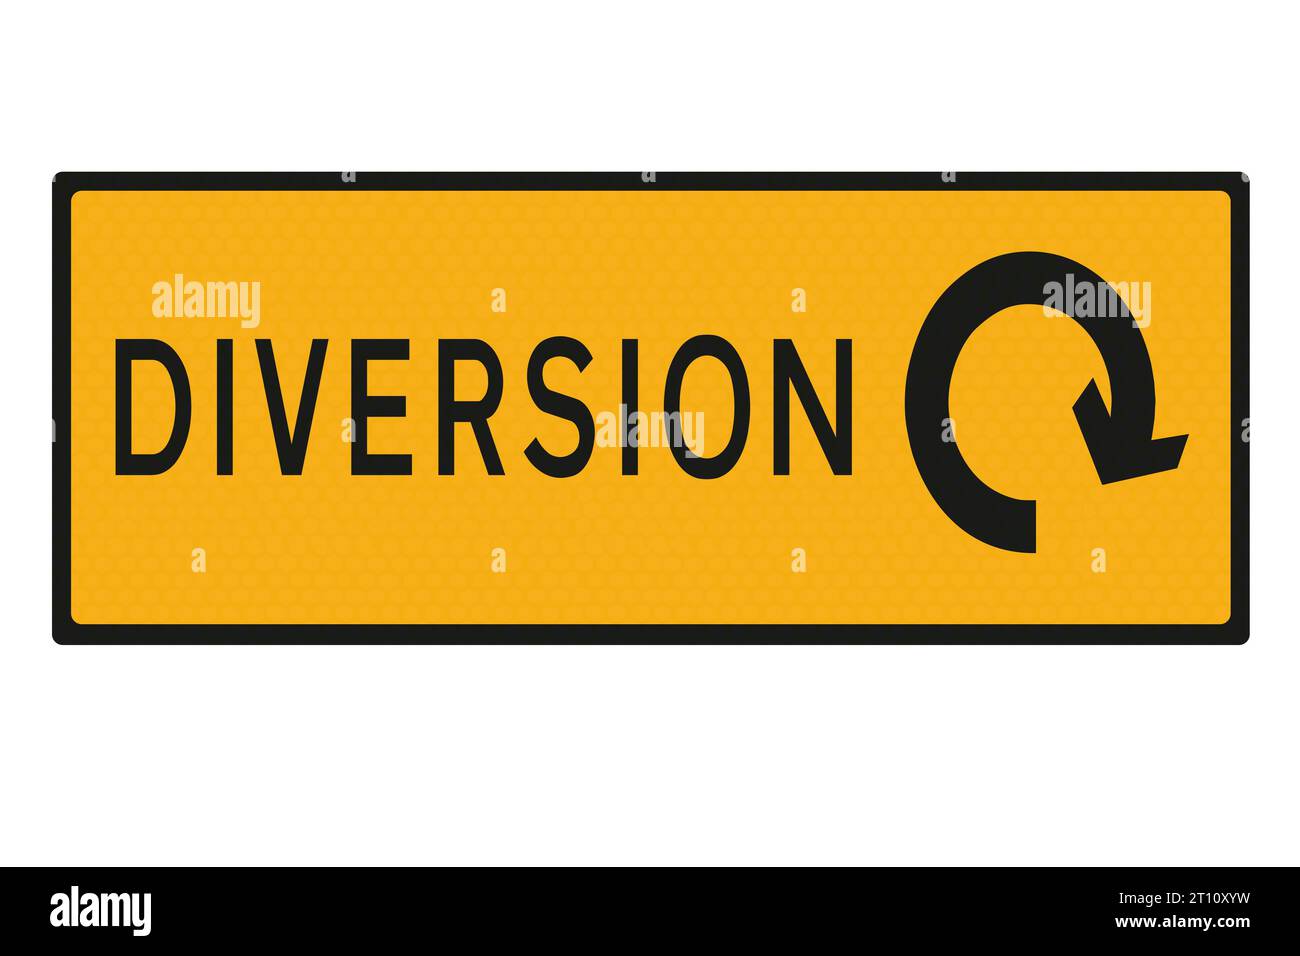 Digital illustration - concept - diversion bringing drivers round in circles. Credit: Imago/Alamy Live News Stock Photo